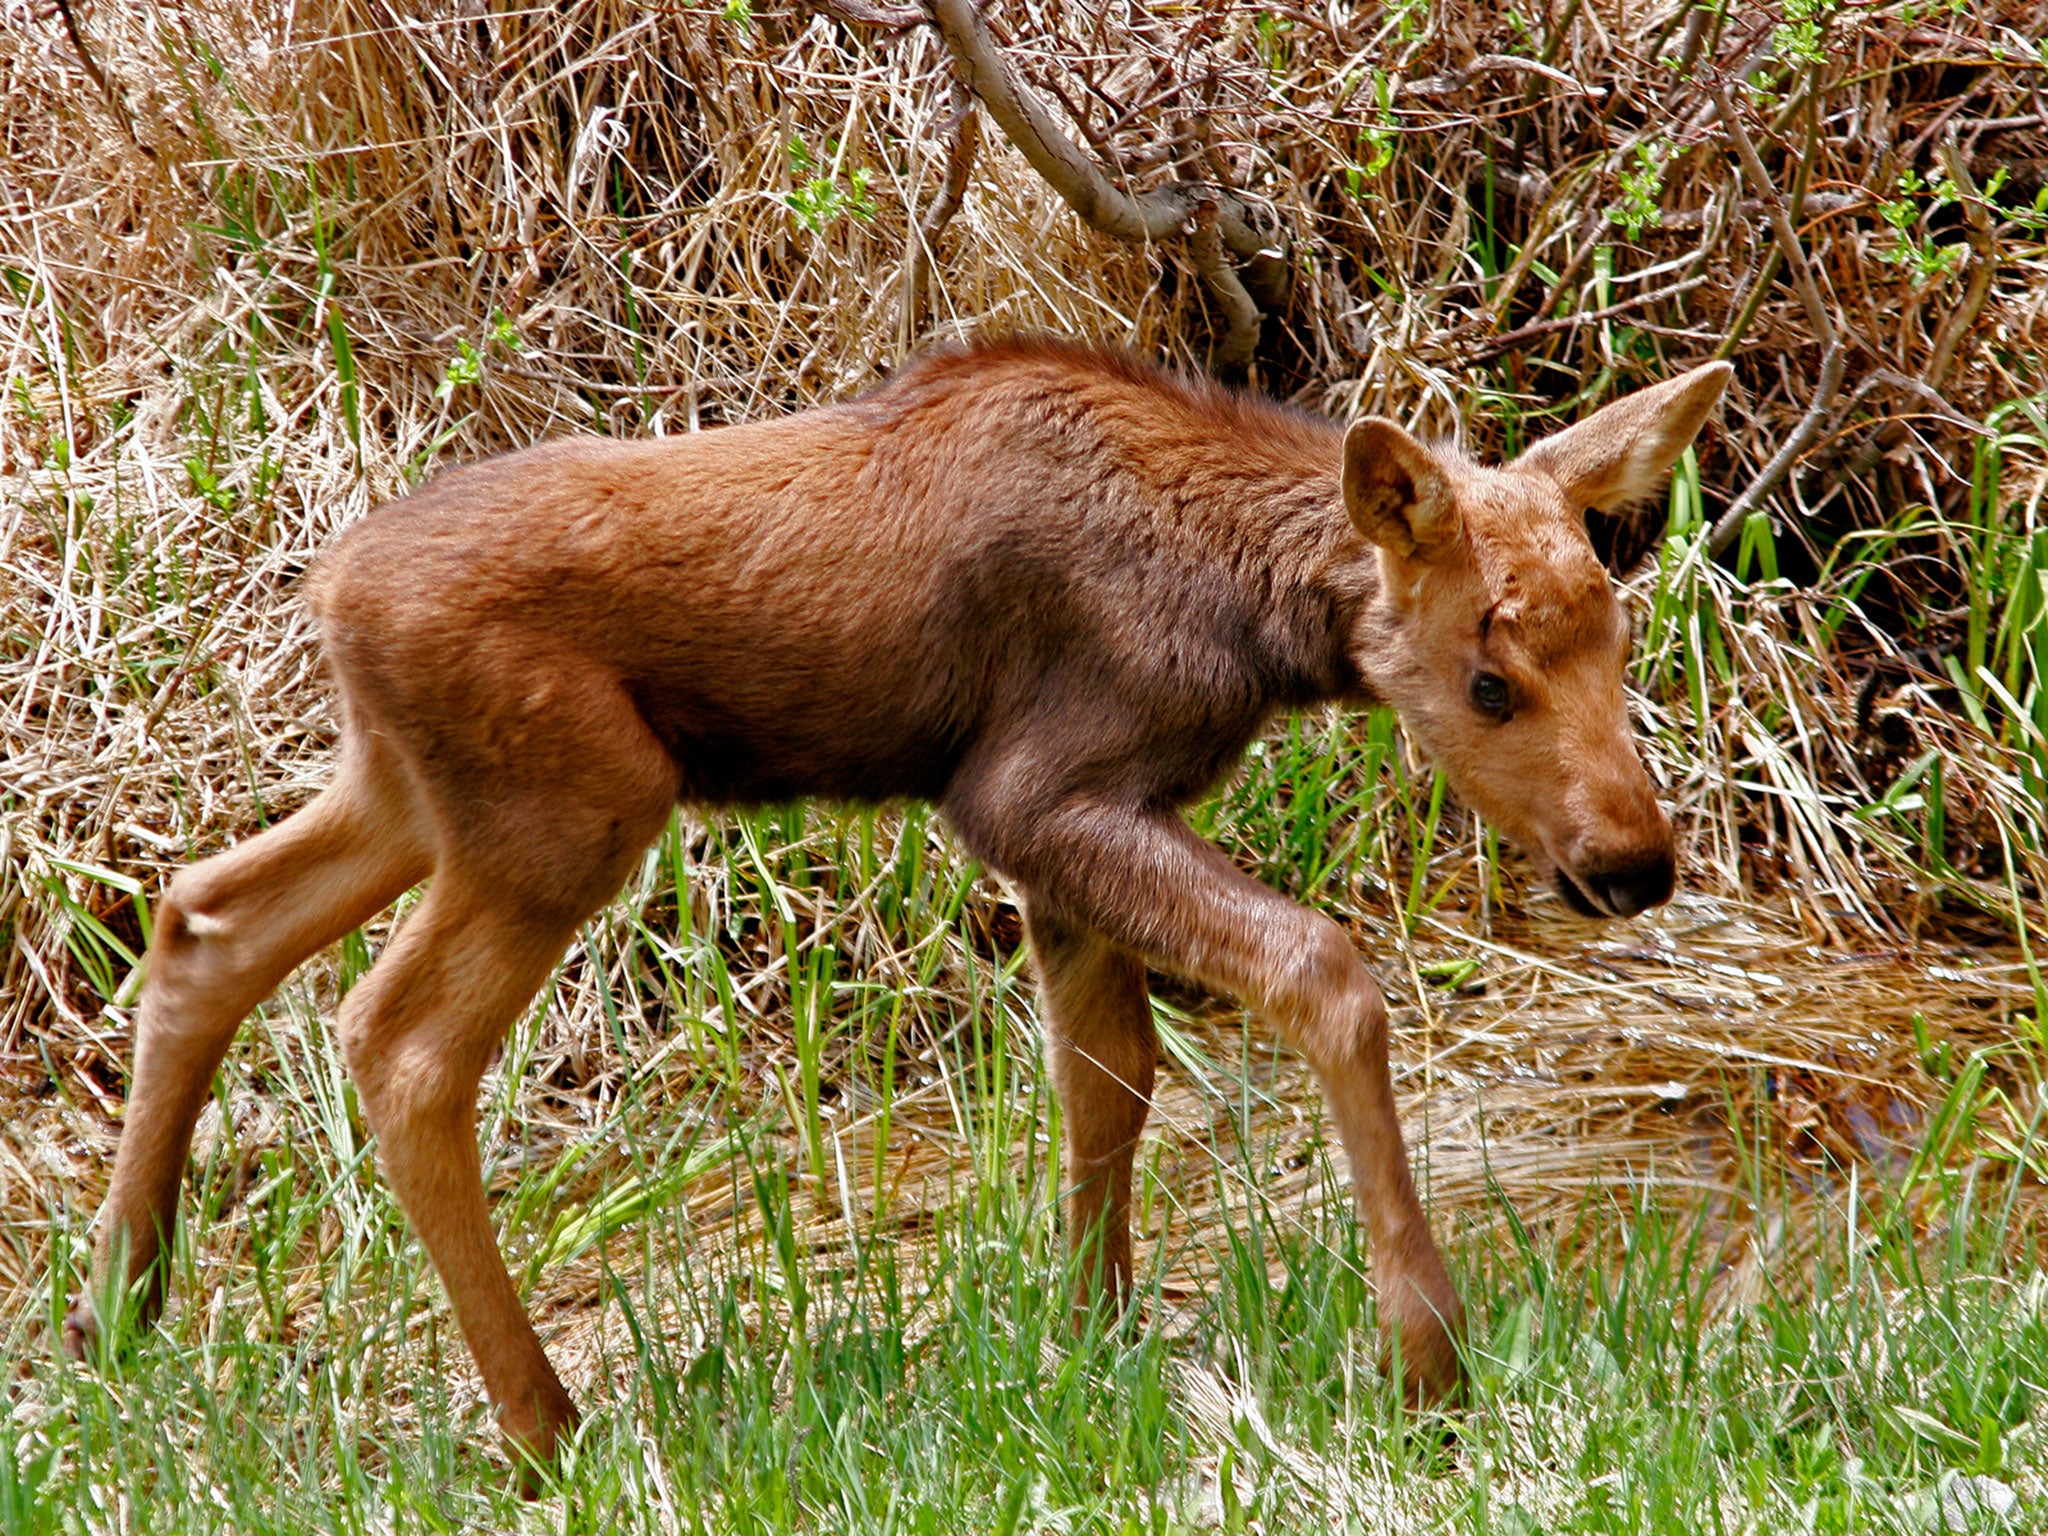 A moose calf